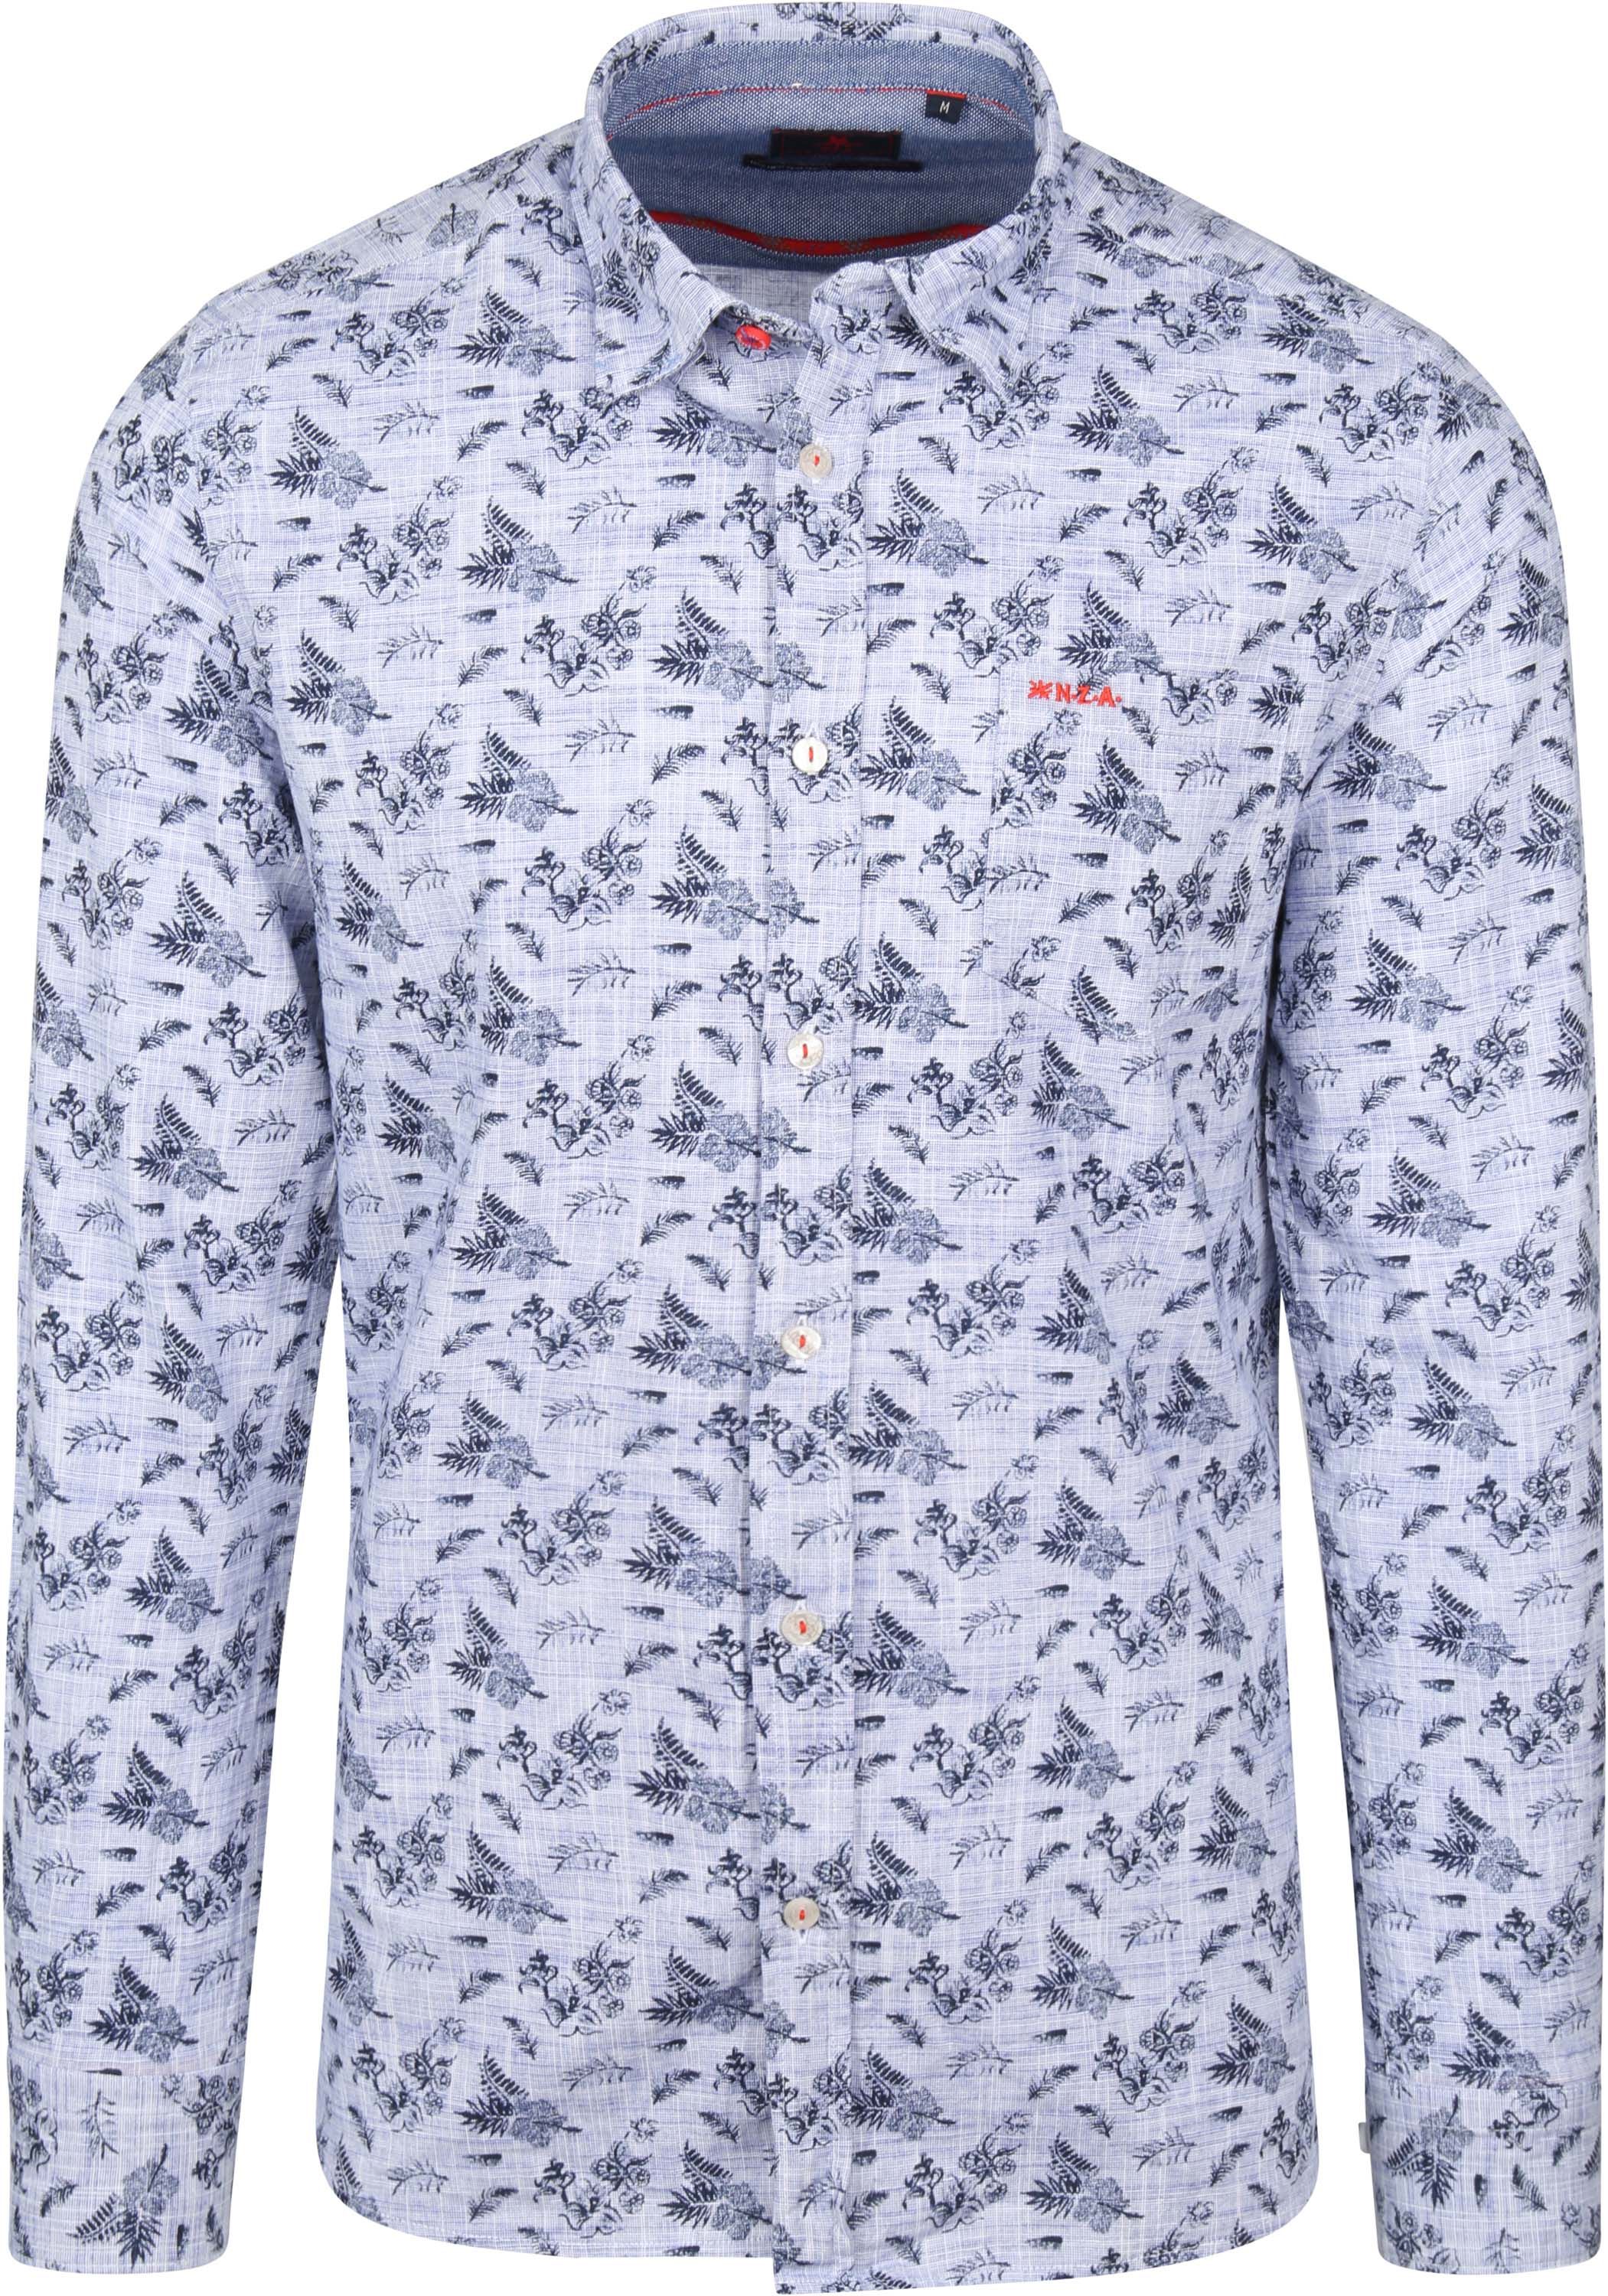 NZA Shirt Rolleston Floral Print Light blue Blue size 3XL